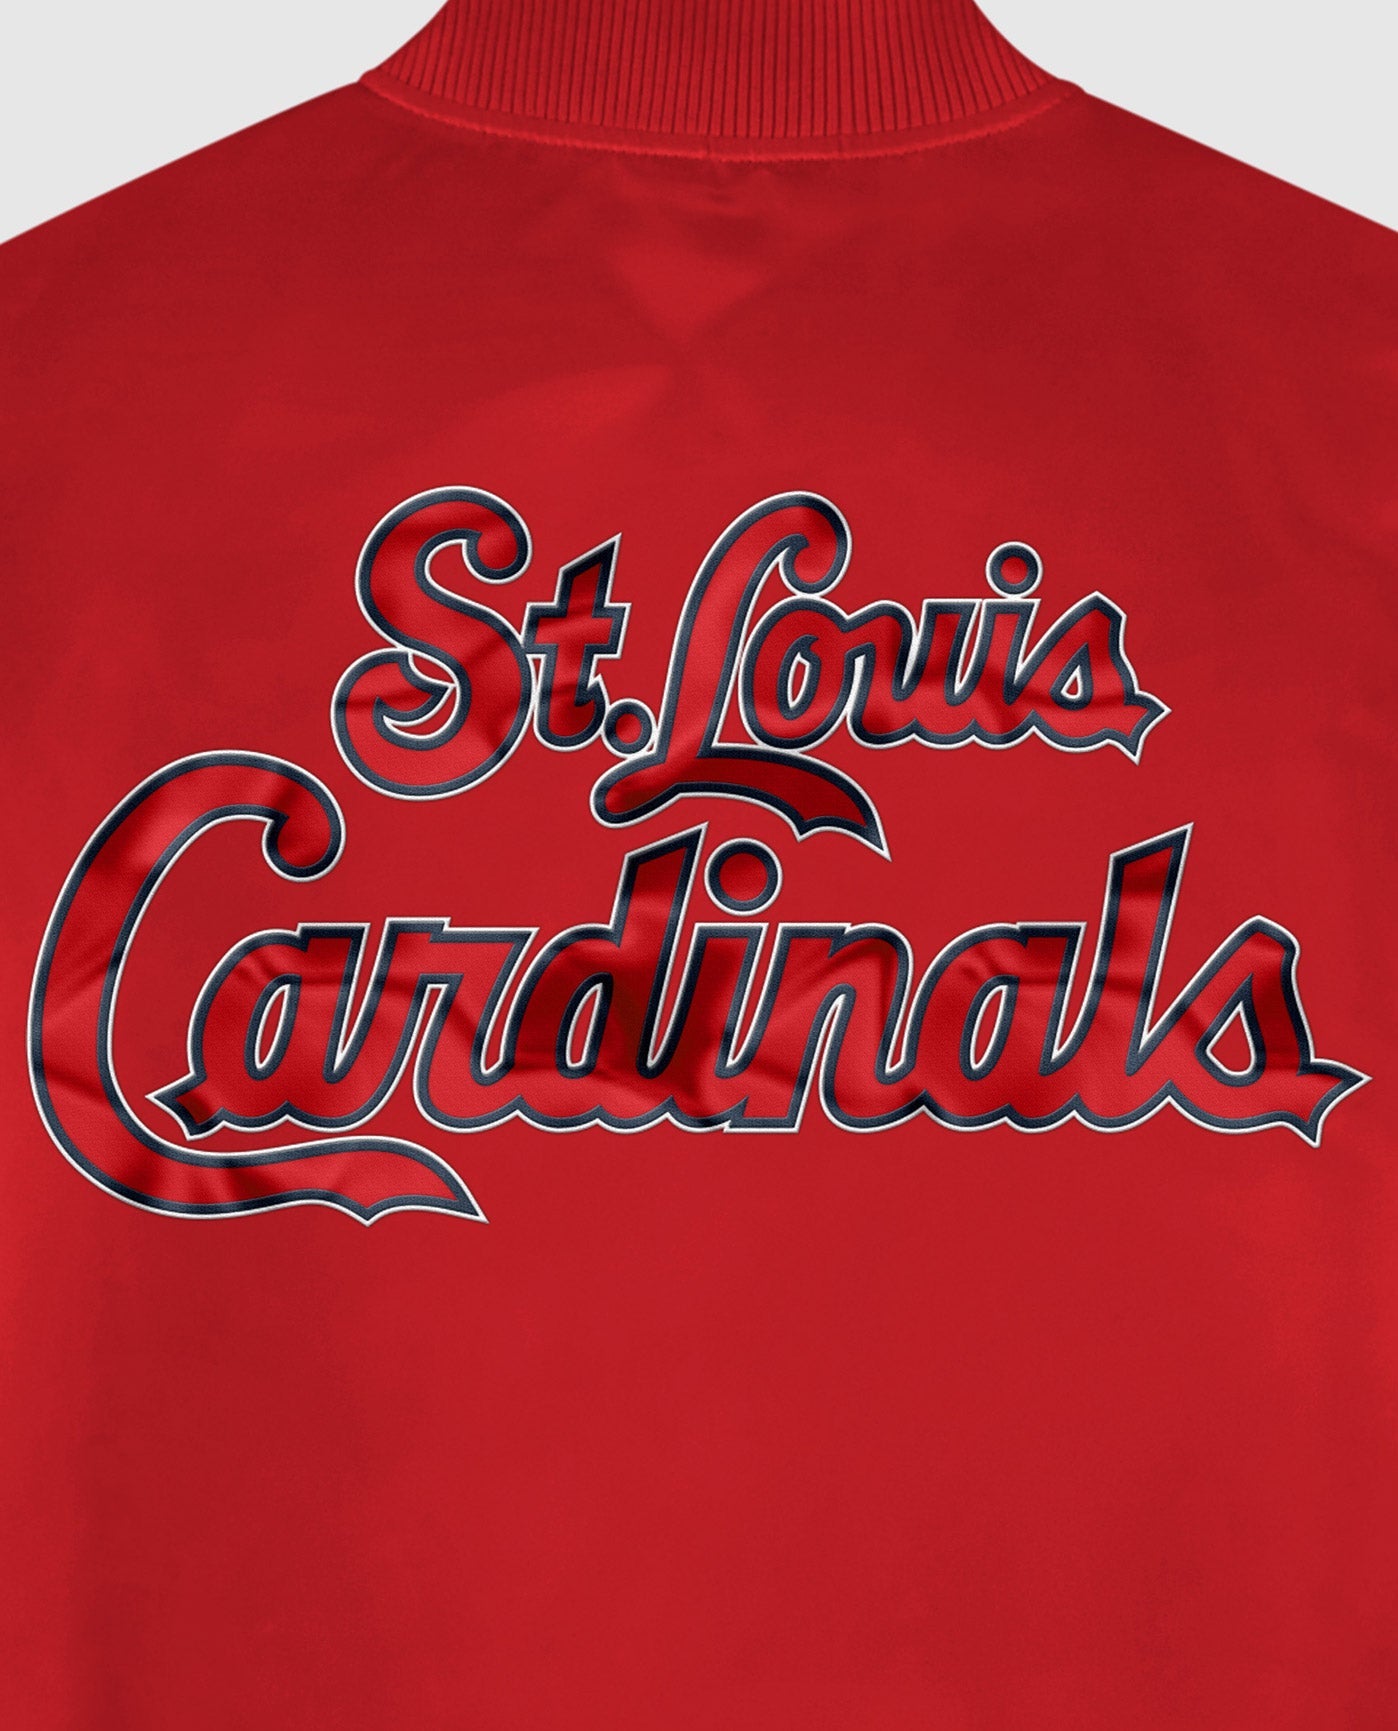 The Captain III St. Louis Cardinals Light Blue Varsity Jacket